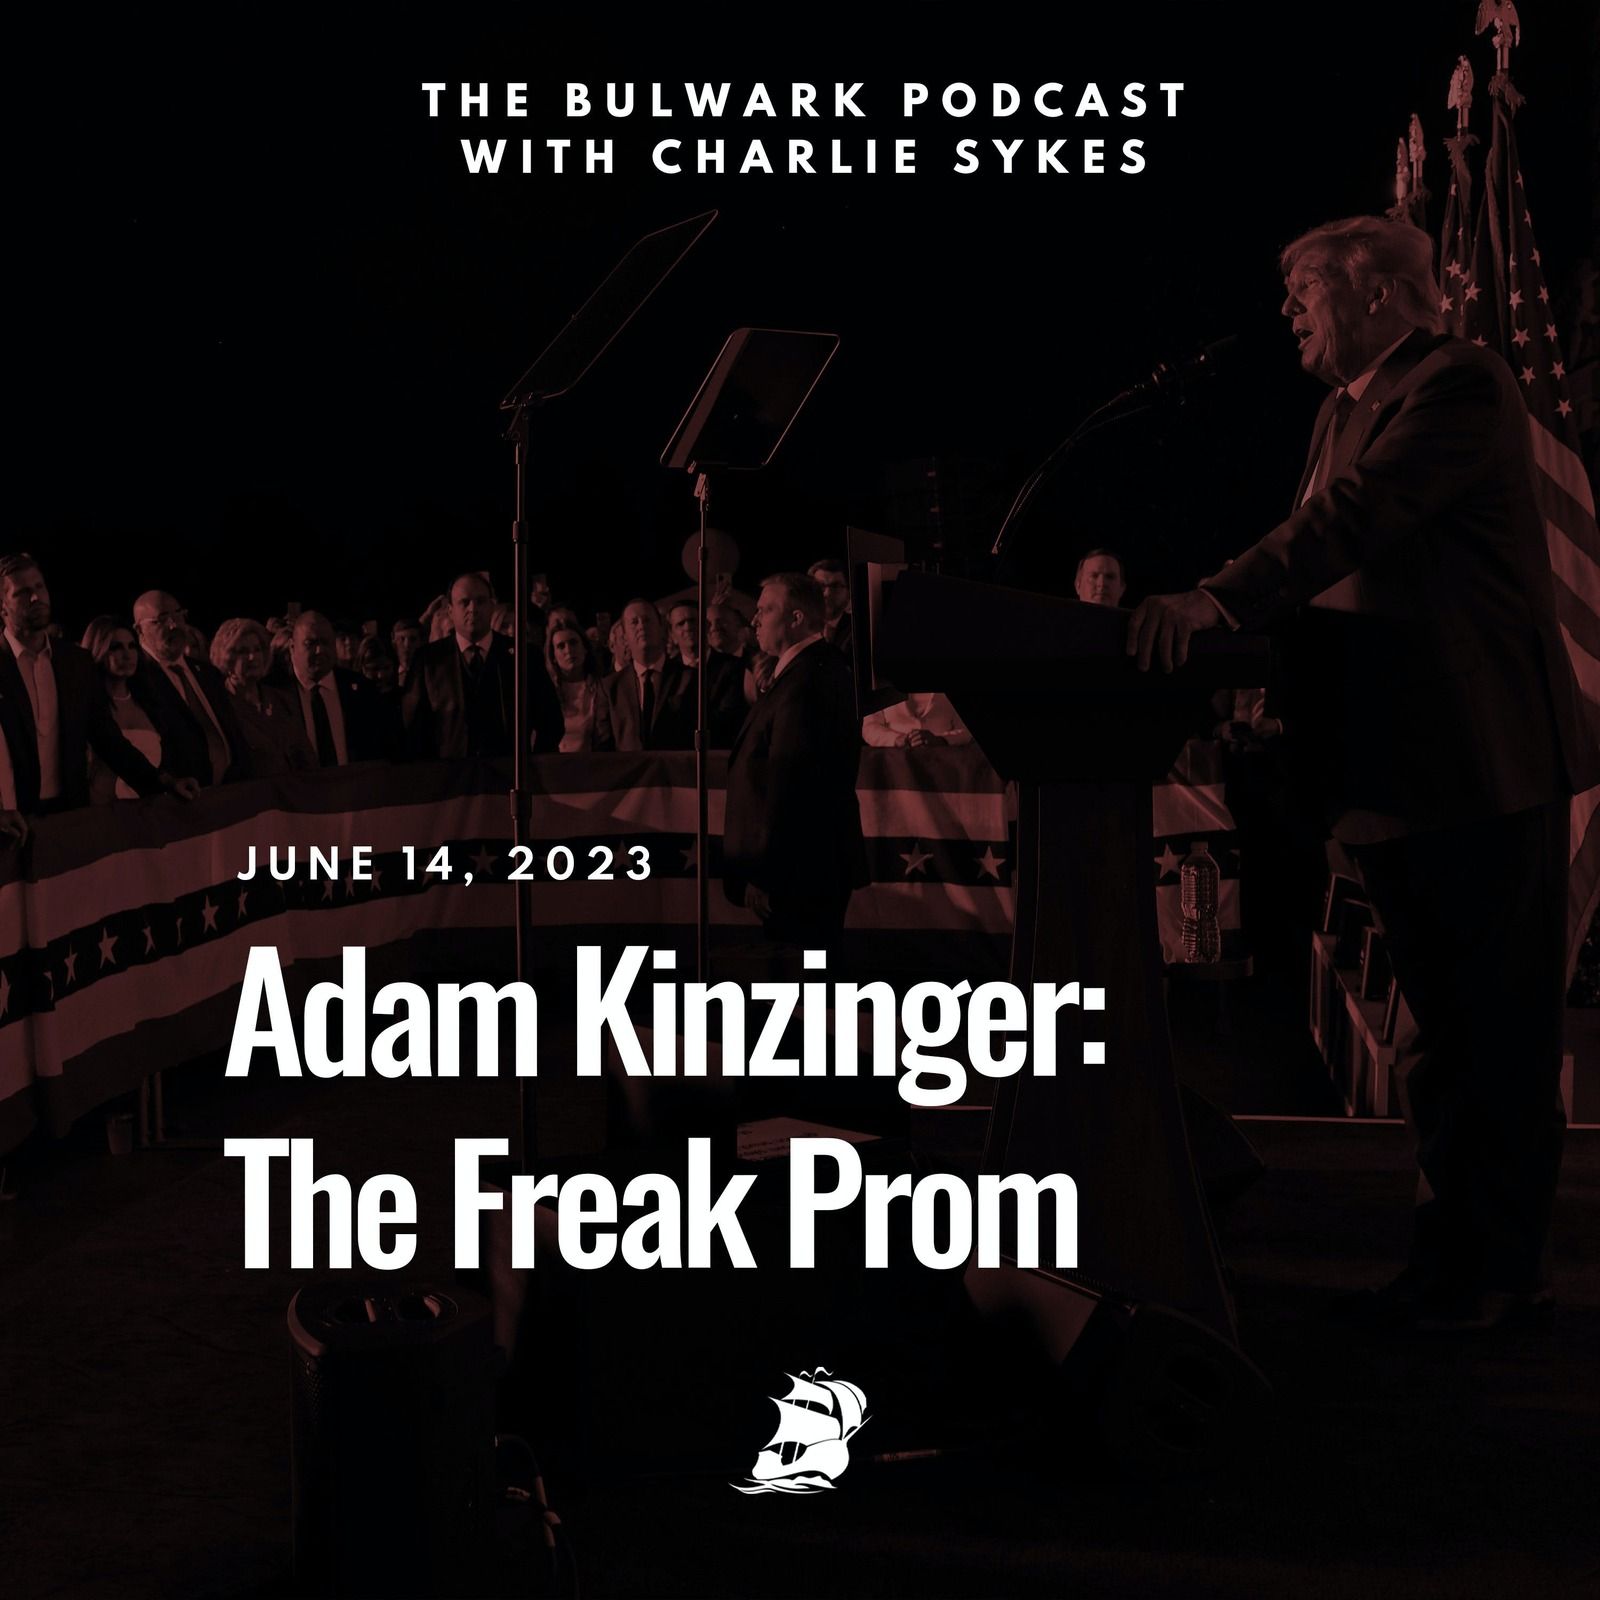 Adam Kinzinger: The Freak Prom by The Bulwark Podcast